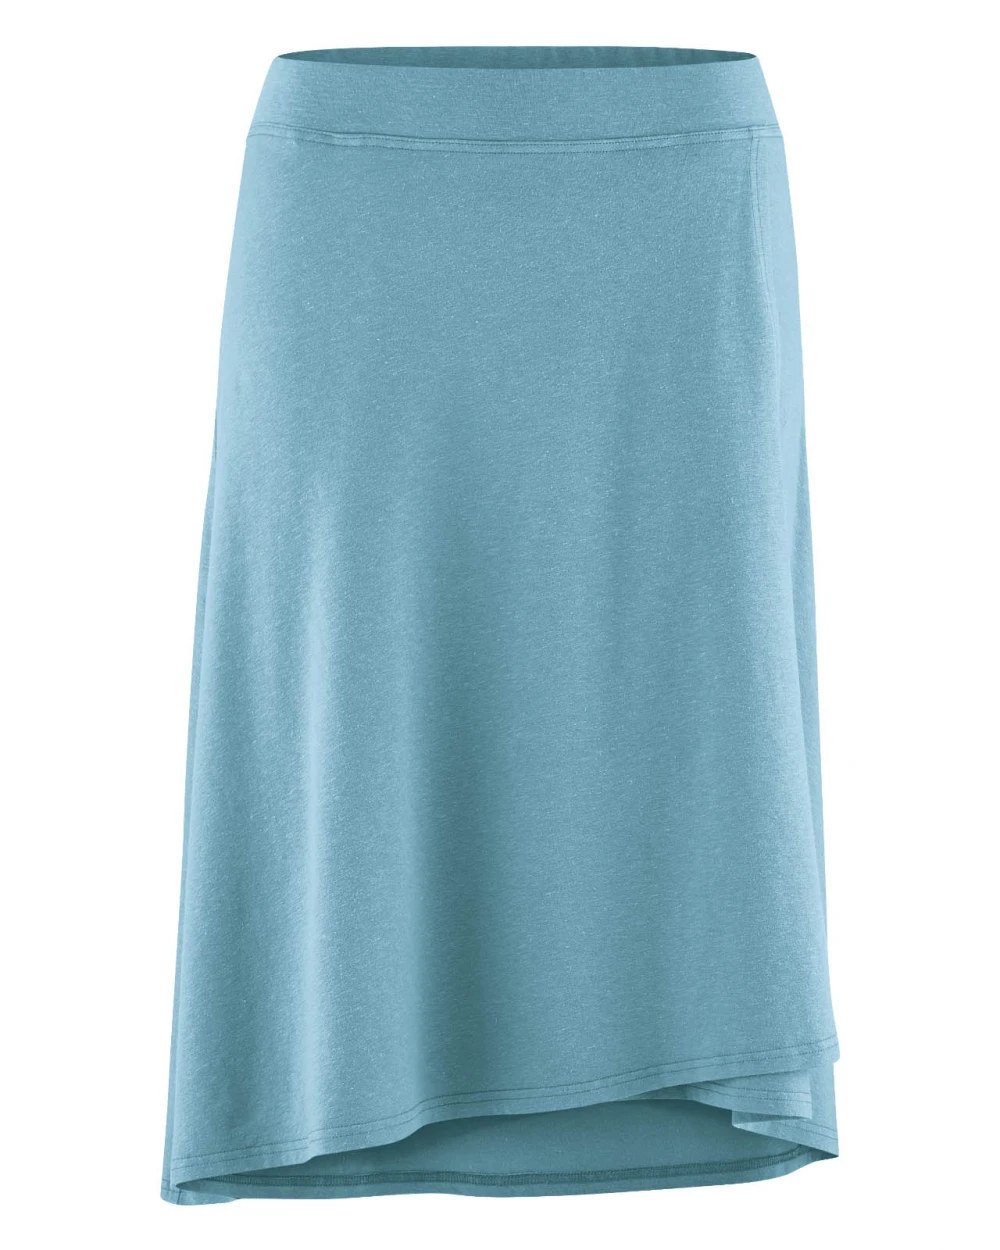 Wrap-around skirt for women in hemp and organic cotton